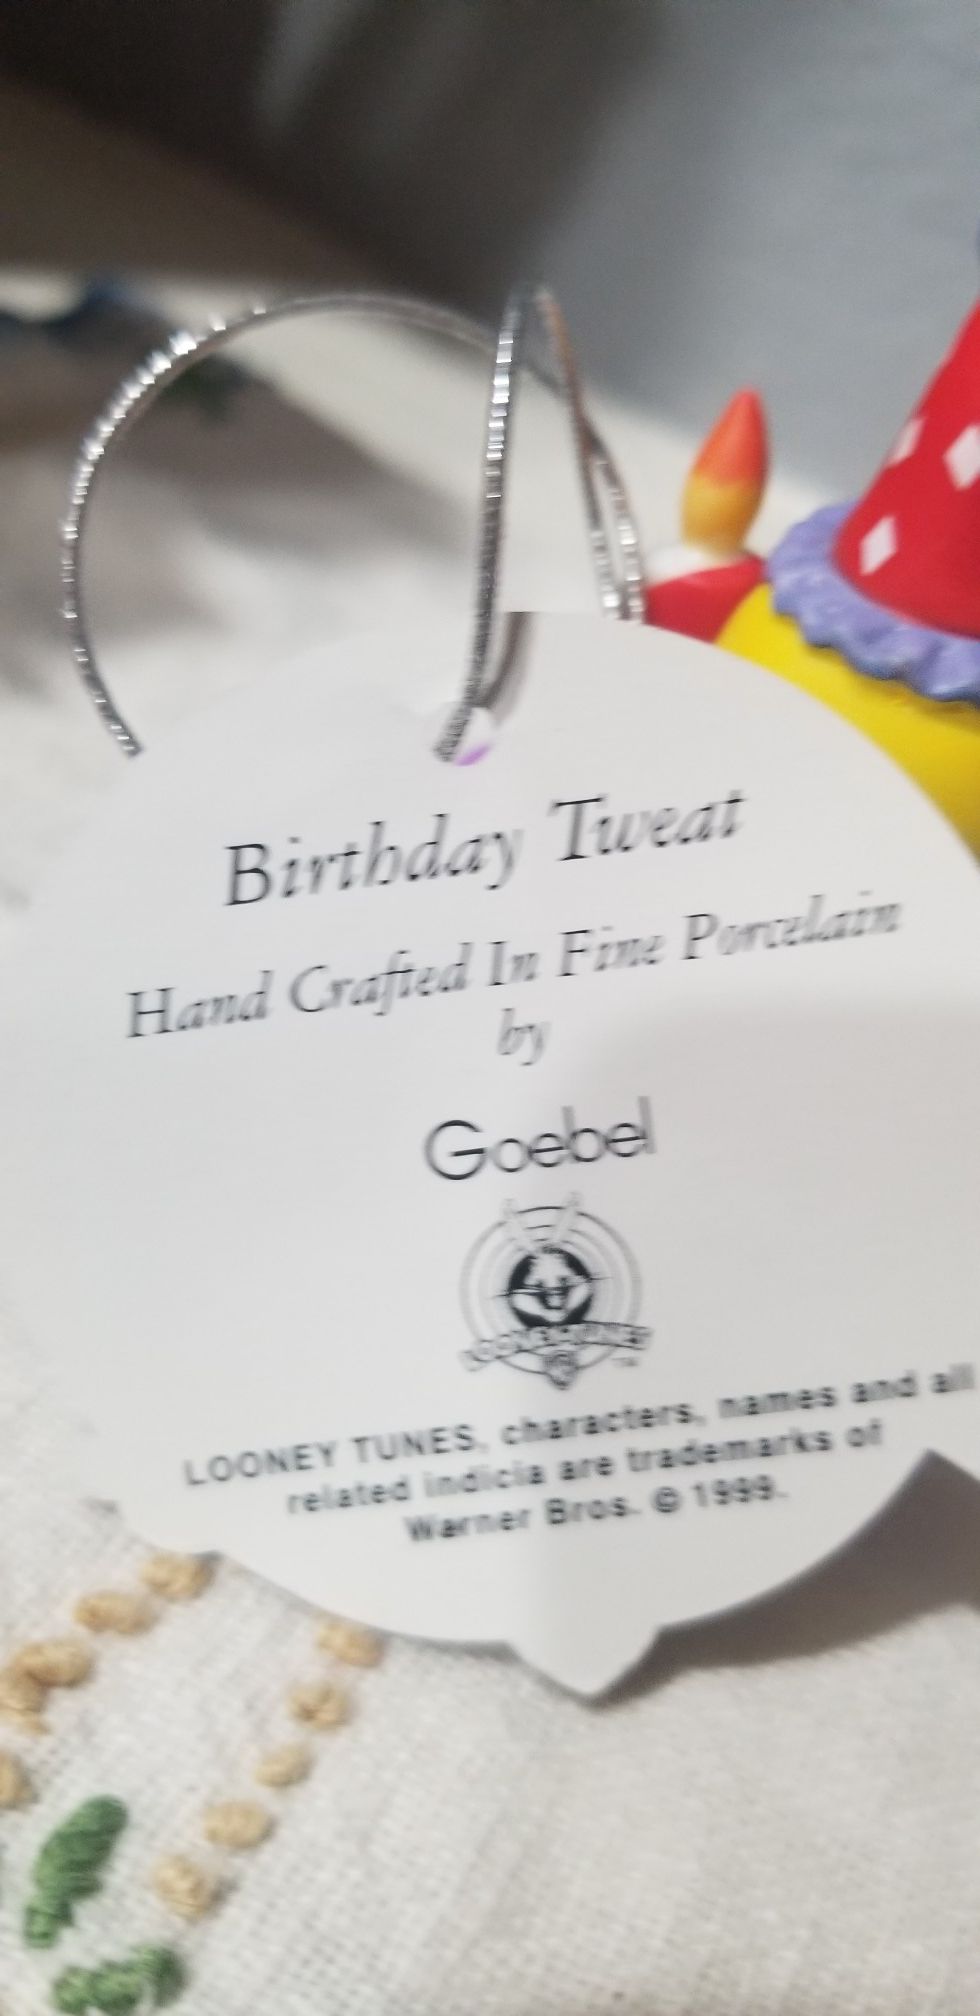 WB~Goebel~Birthday Tweat~Tweety Bird~Looney Tunes